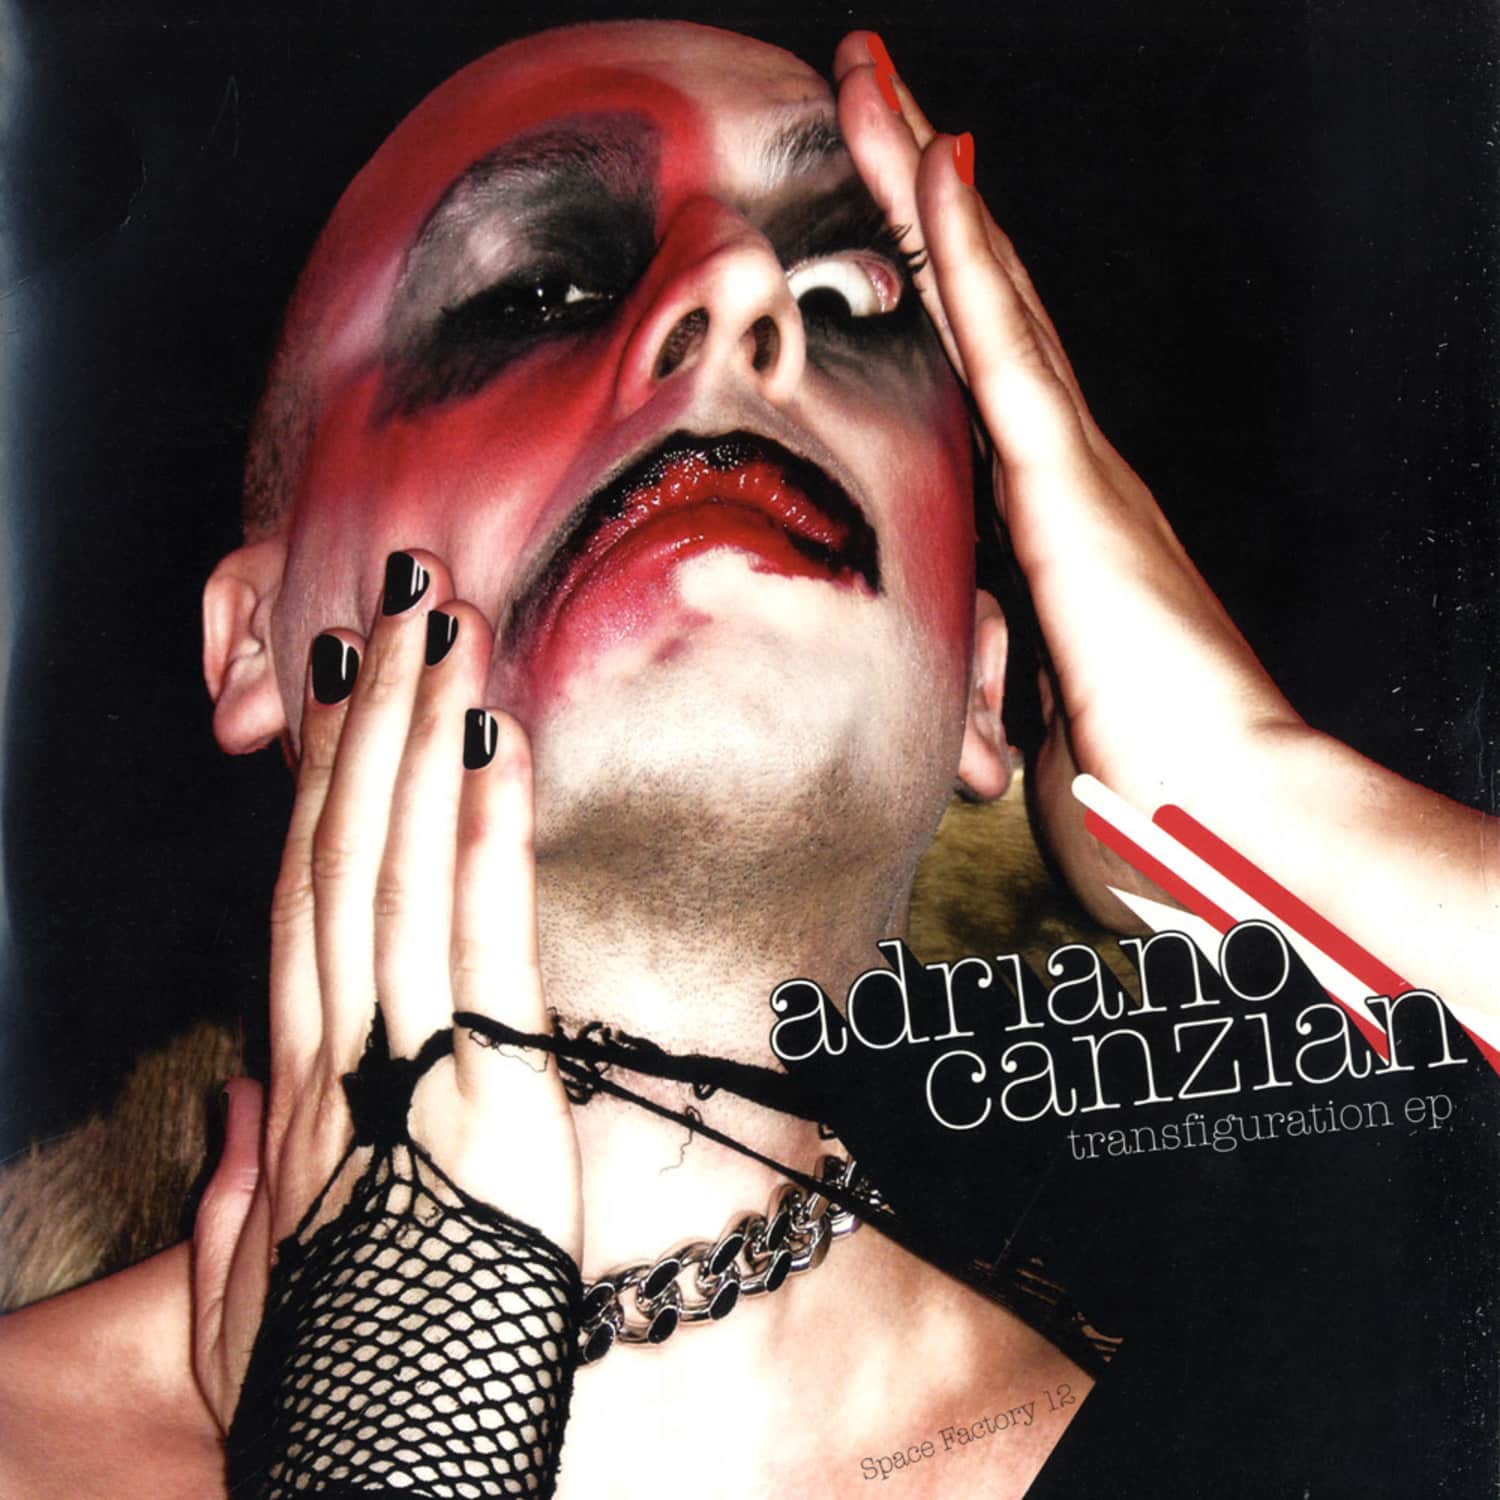 Adriano Canzian - TRANSFIGURATION EP